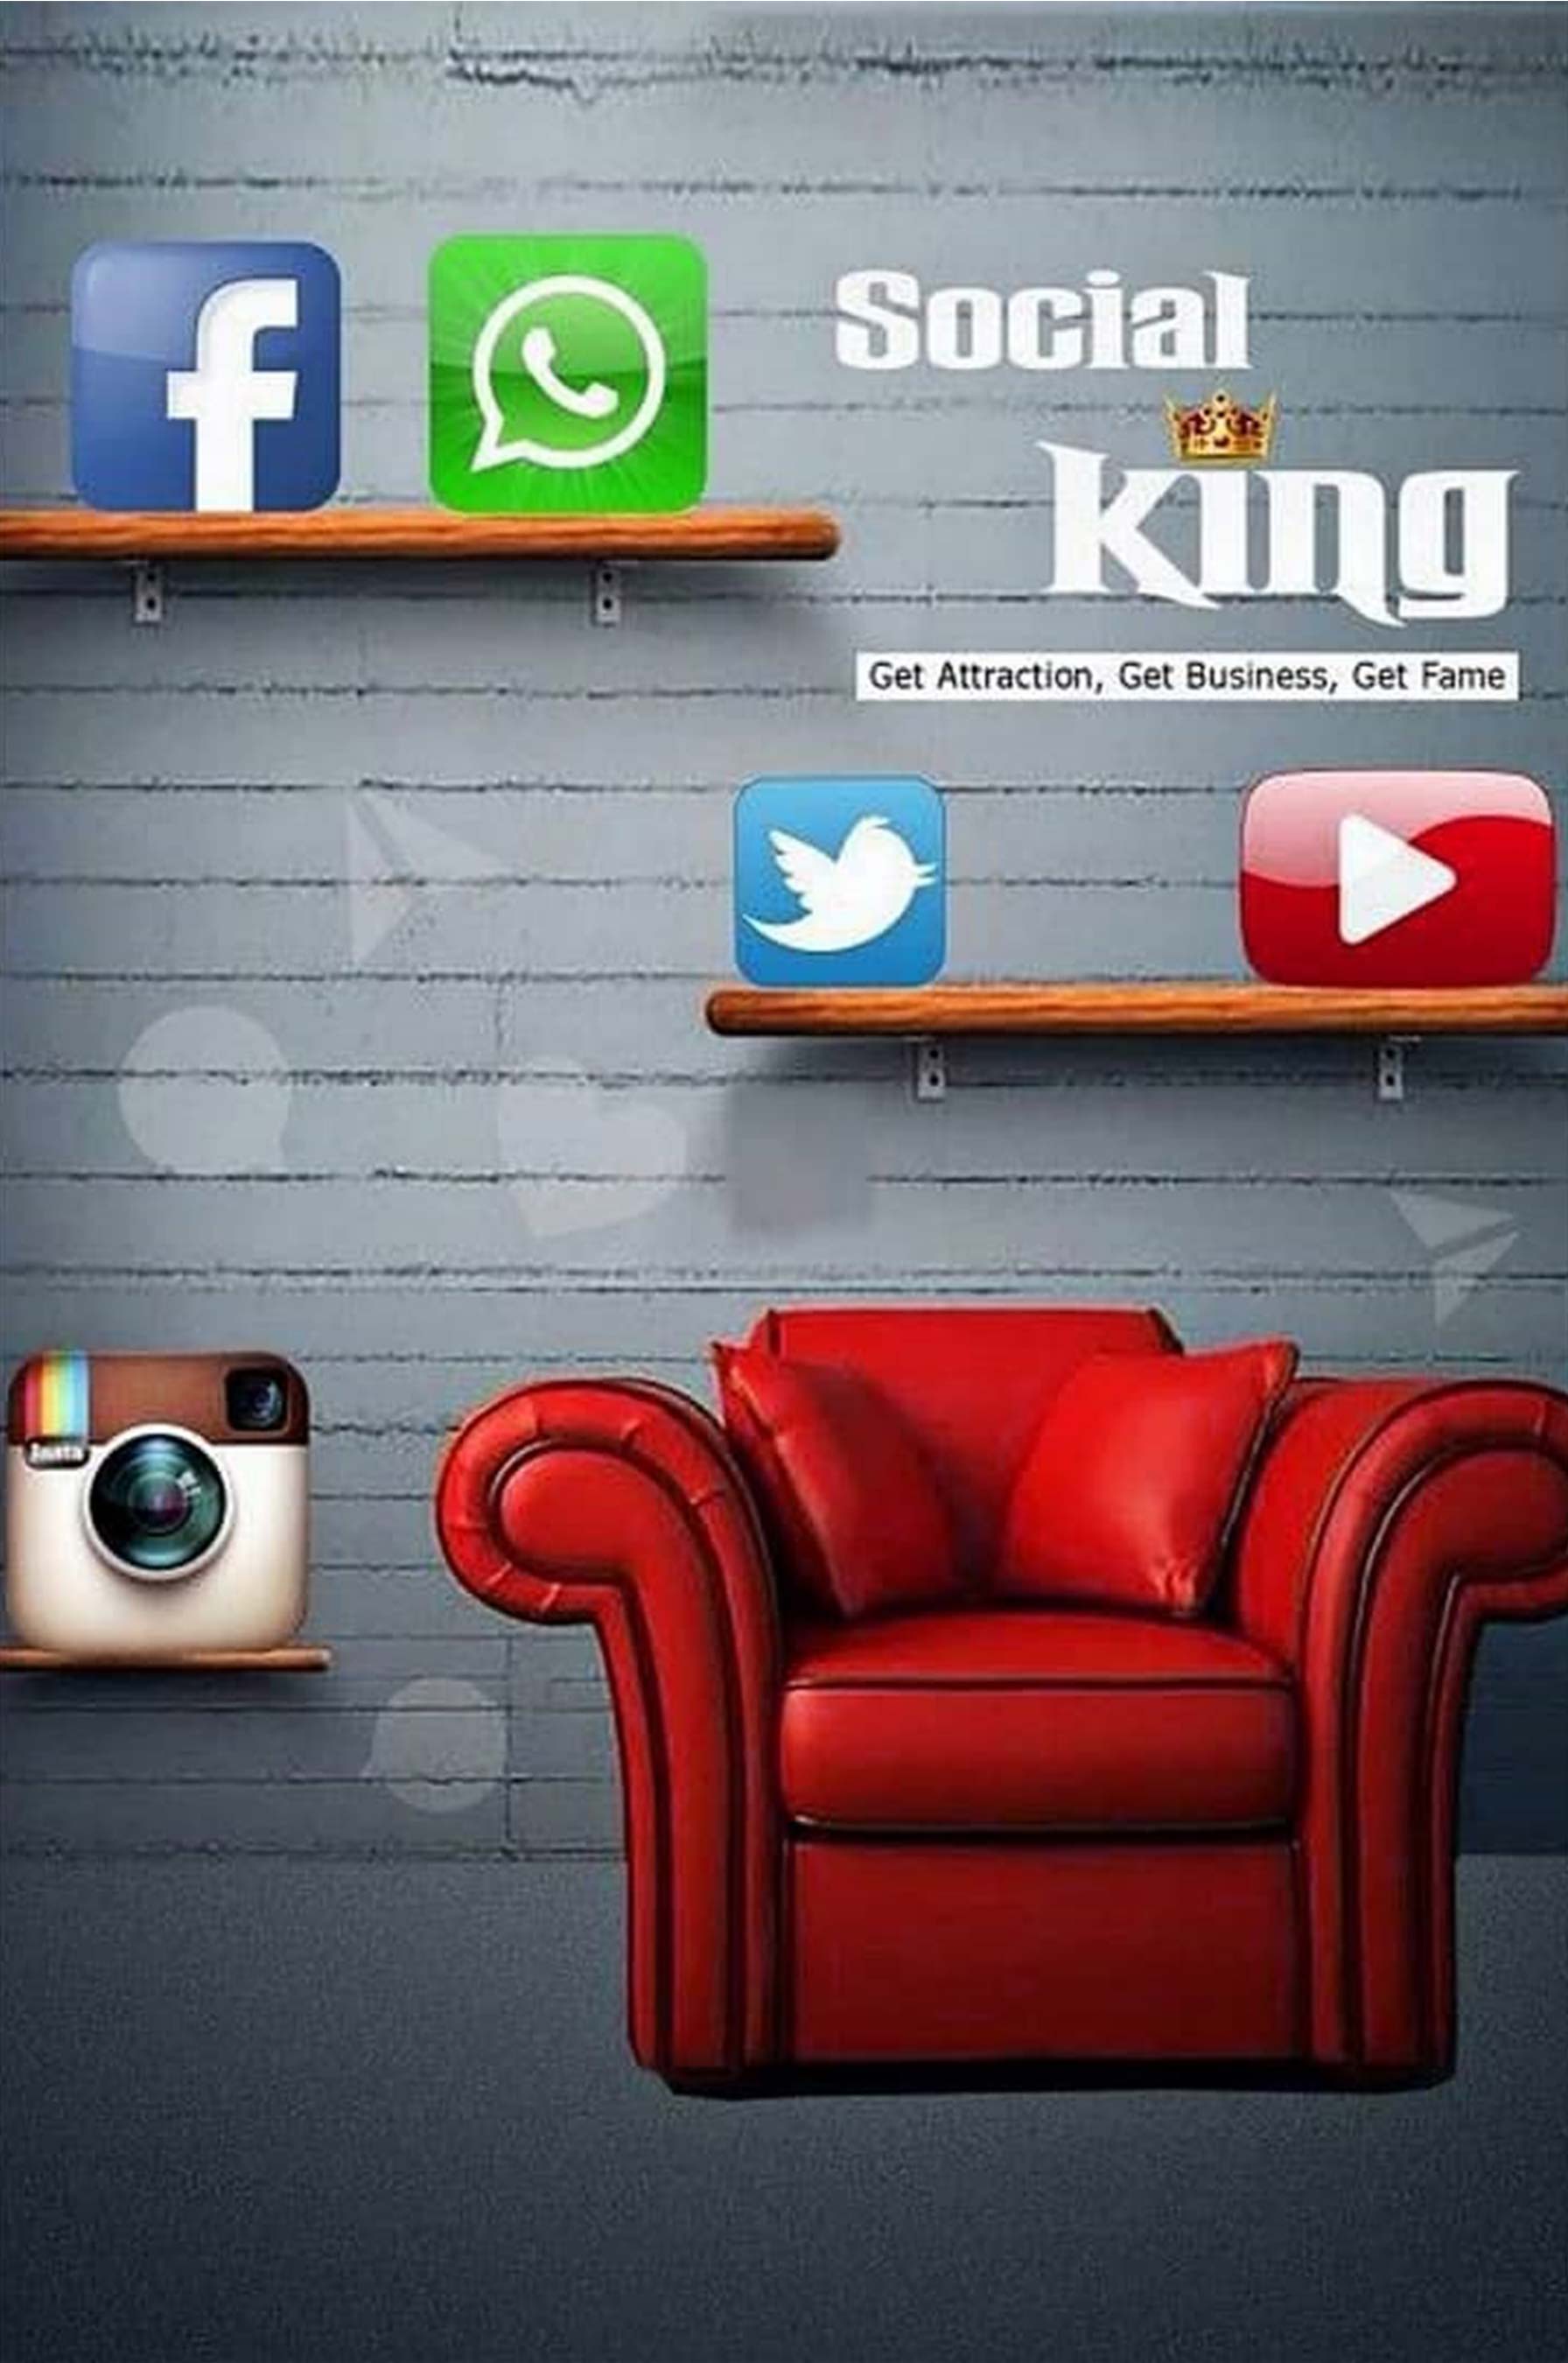 Social King PicsArt Background Free Stock Image